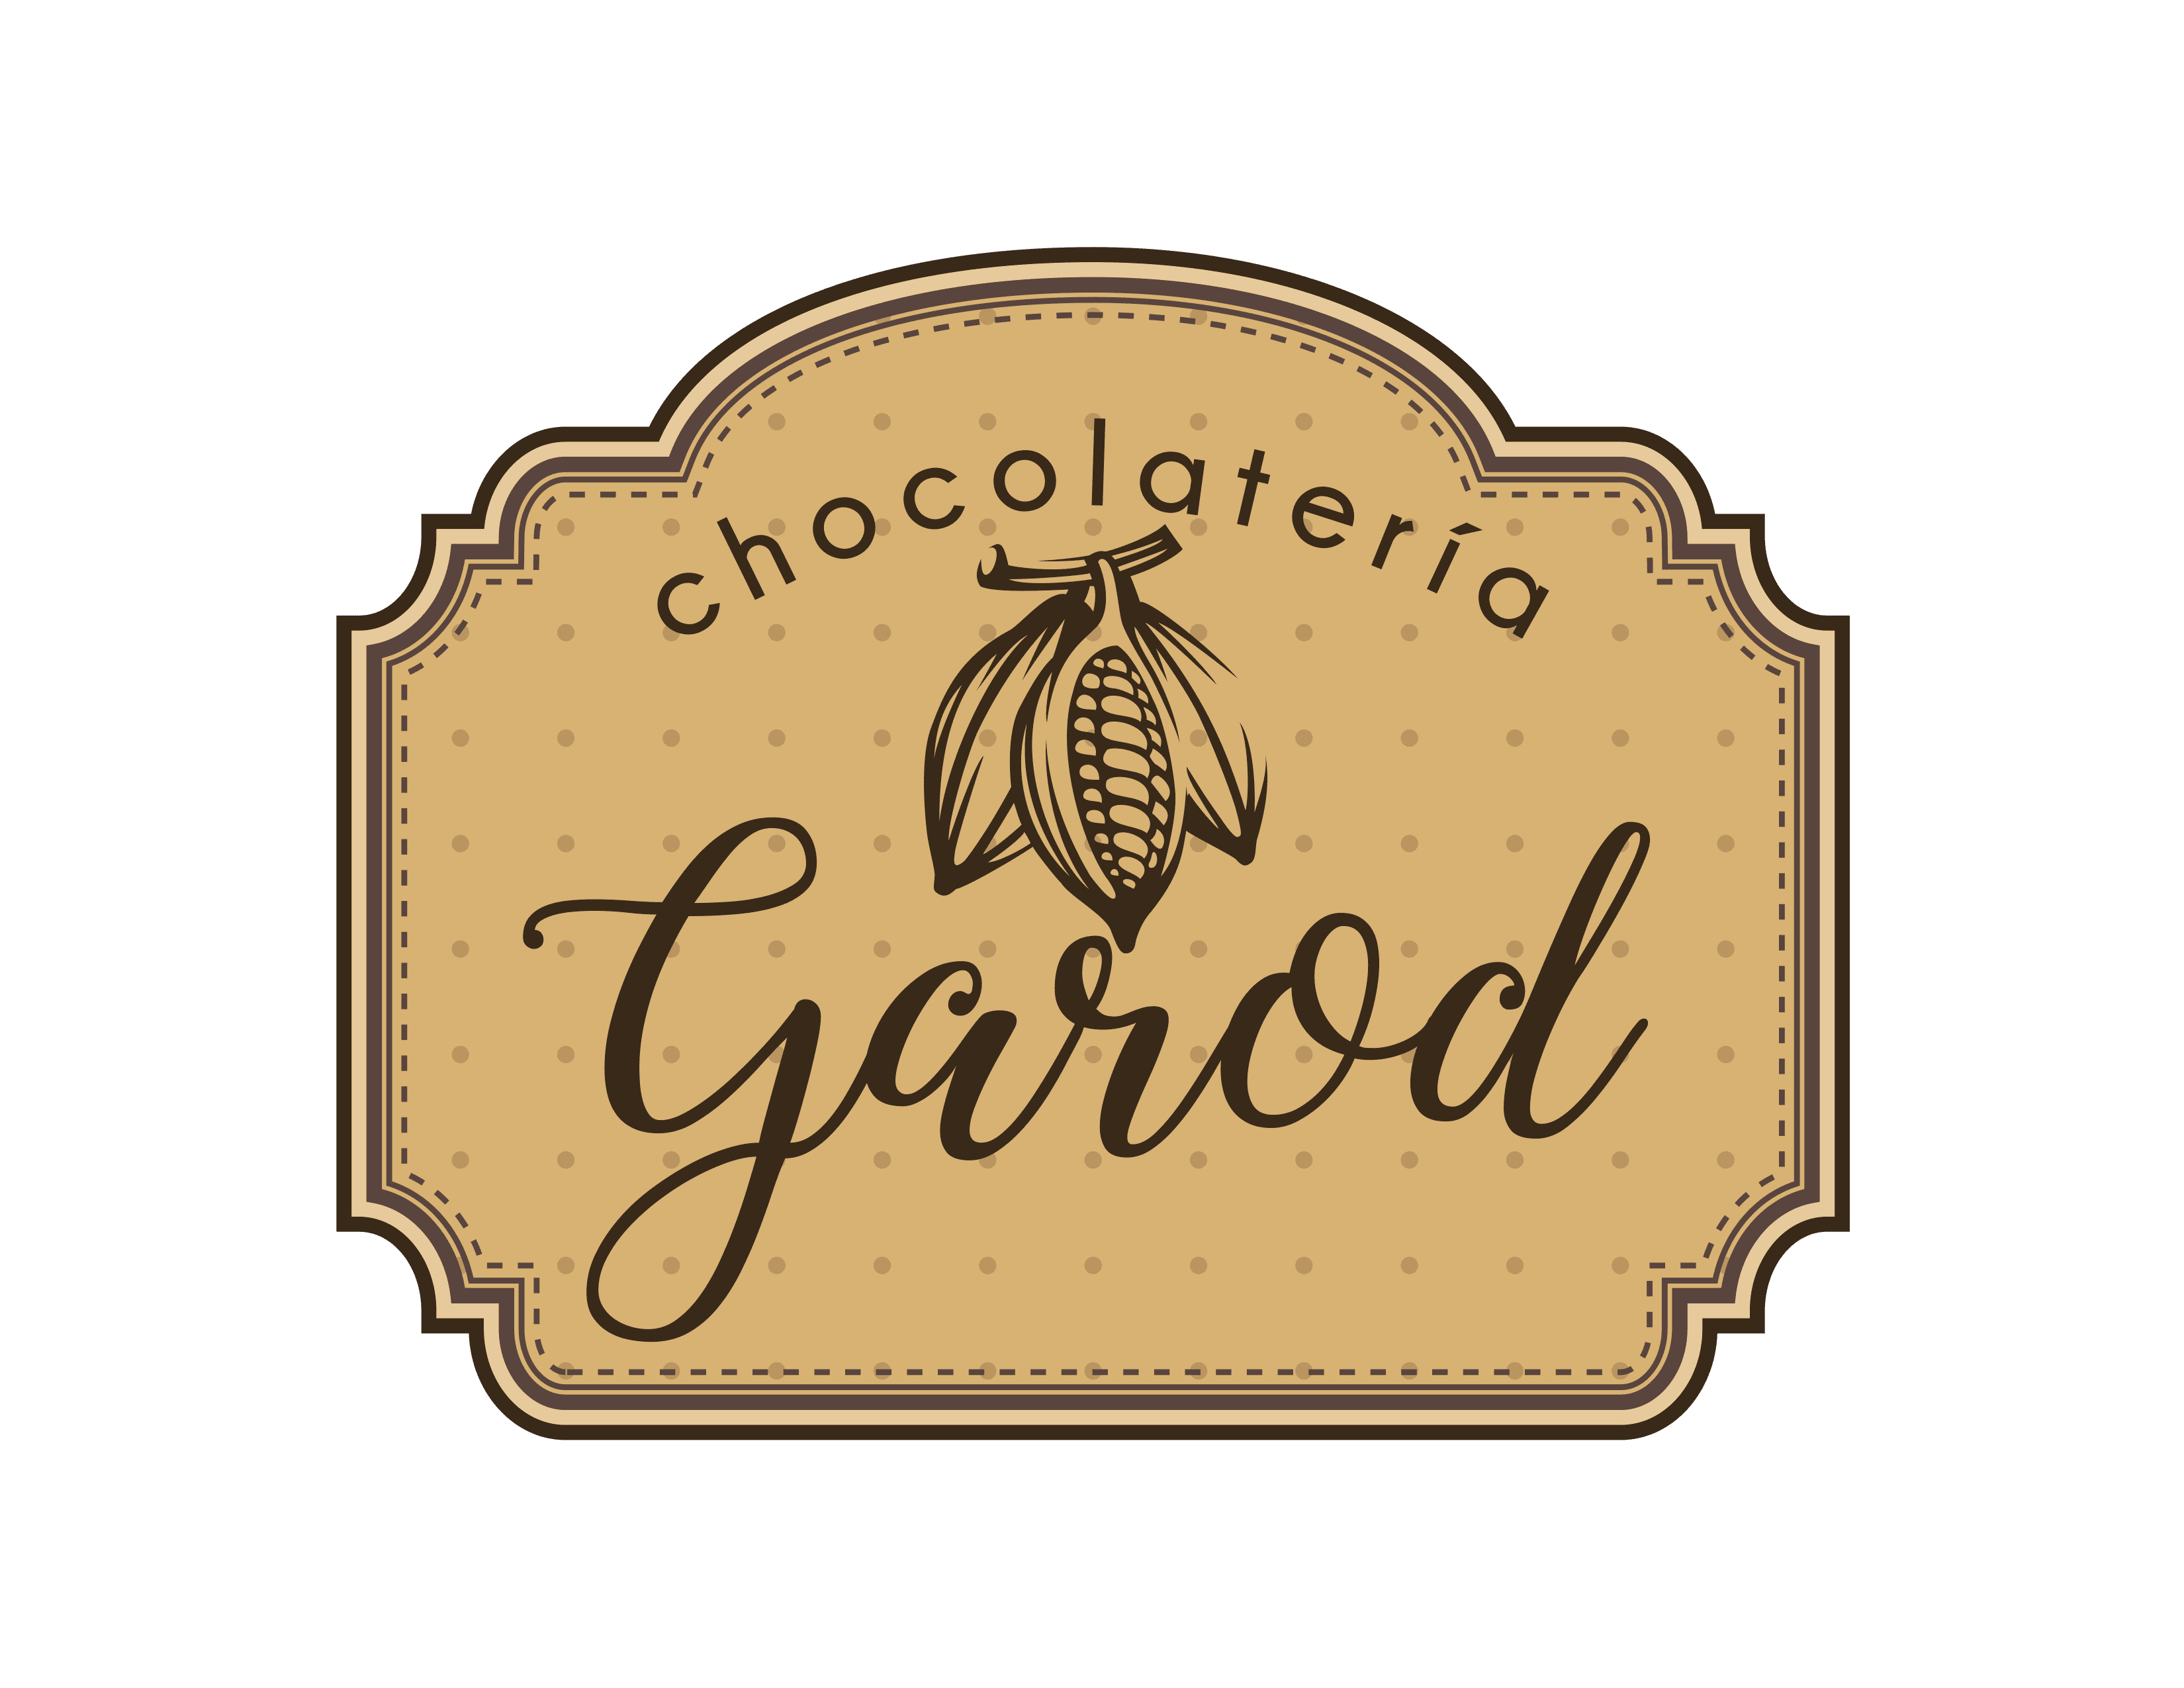 Chocolatería Garod